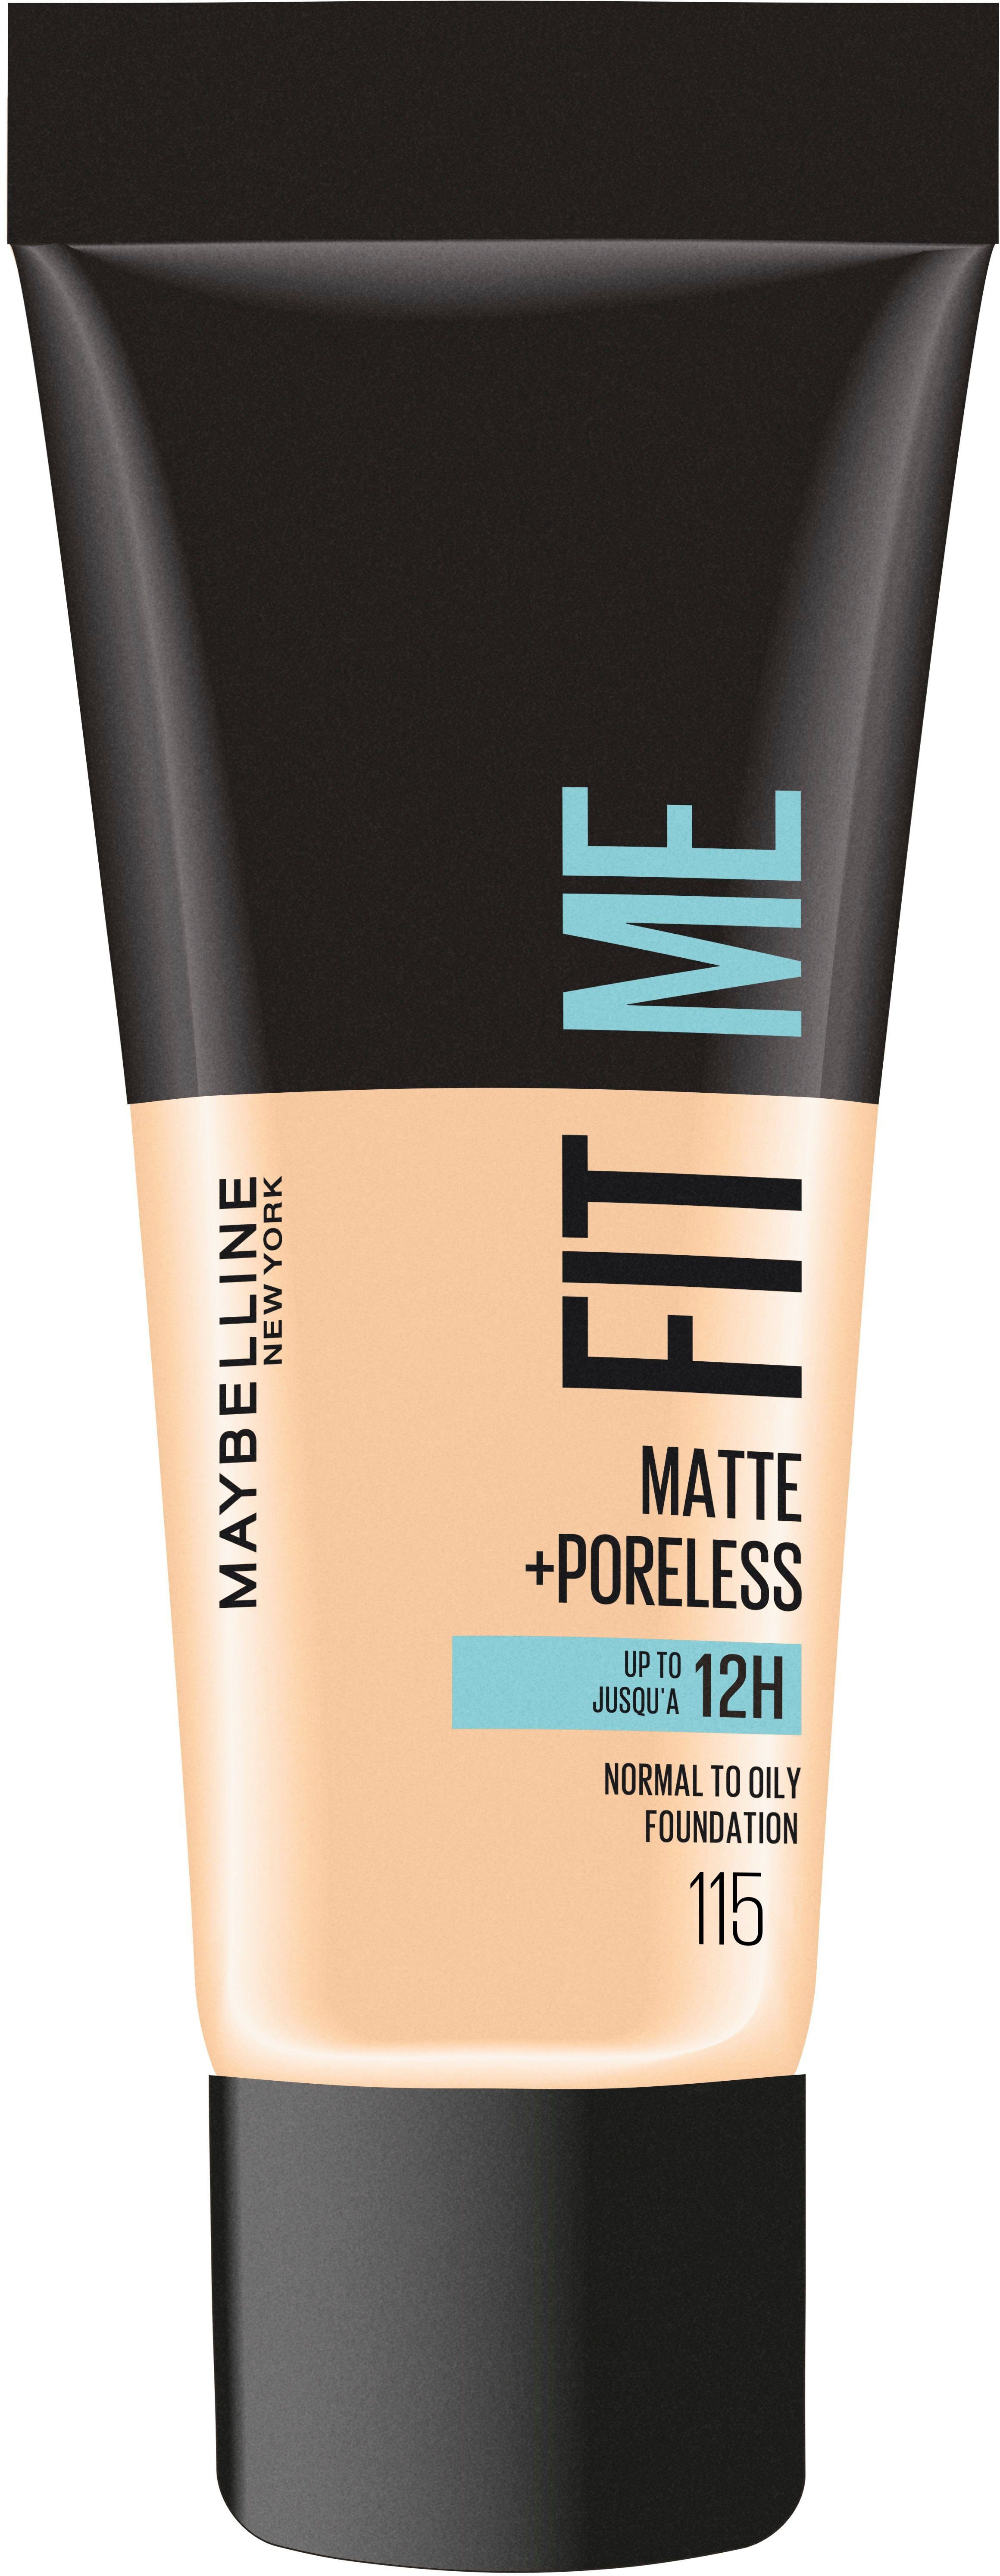 York Foundation NEW Fit Maybelline MAYBELLINE New Me! YORK Poreless + Matte Make-Up